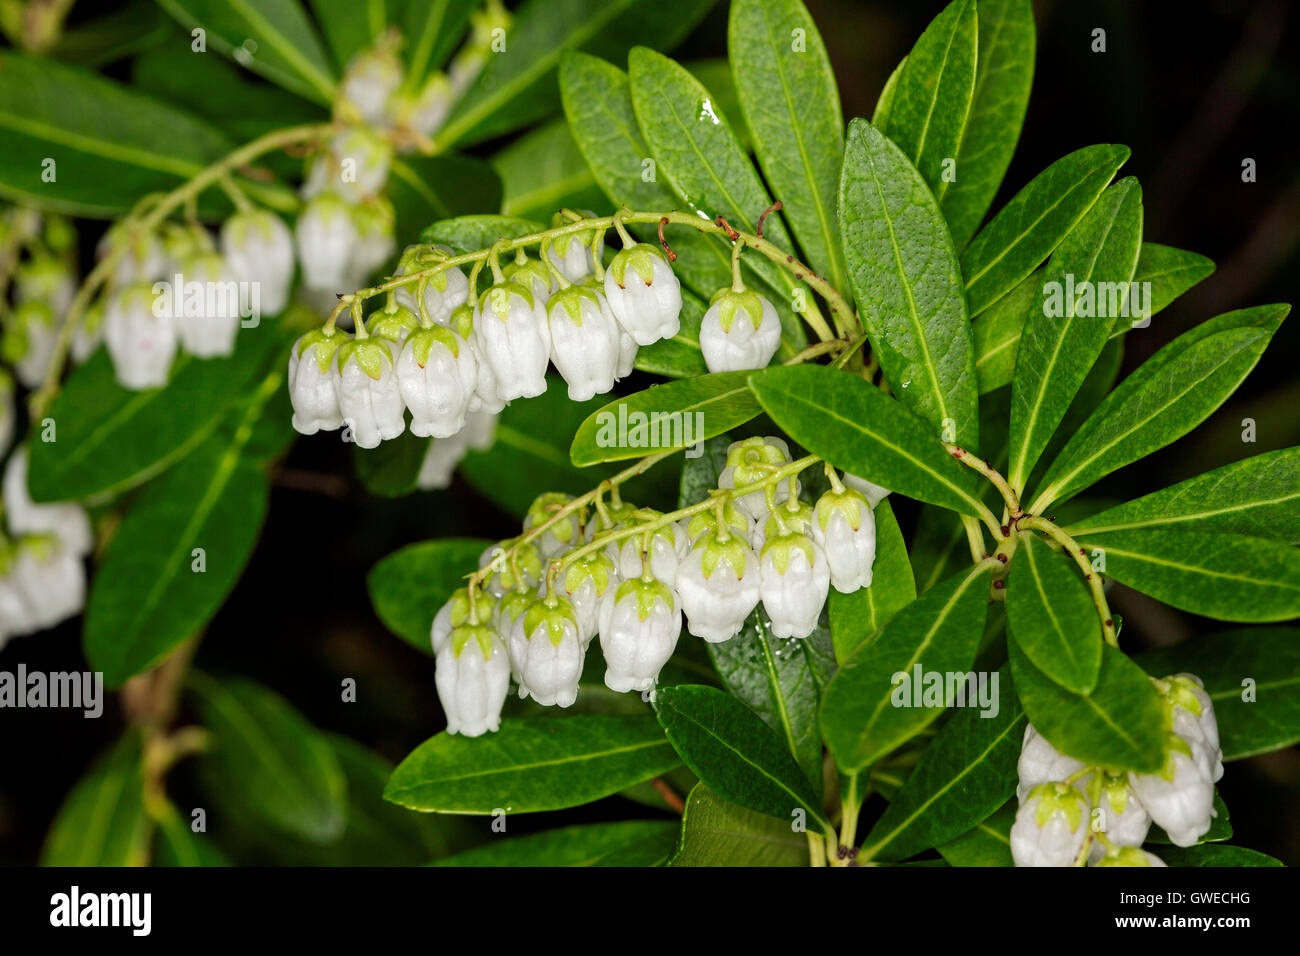 Clusters of white flowers & emerald green leaves of shrub Pieris ryukuensis 'Temple Bells' on dark background Stock Photo